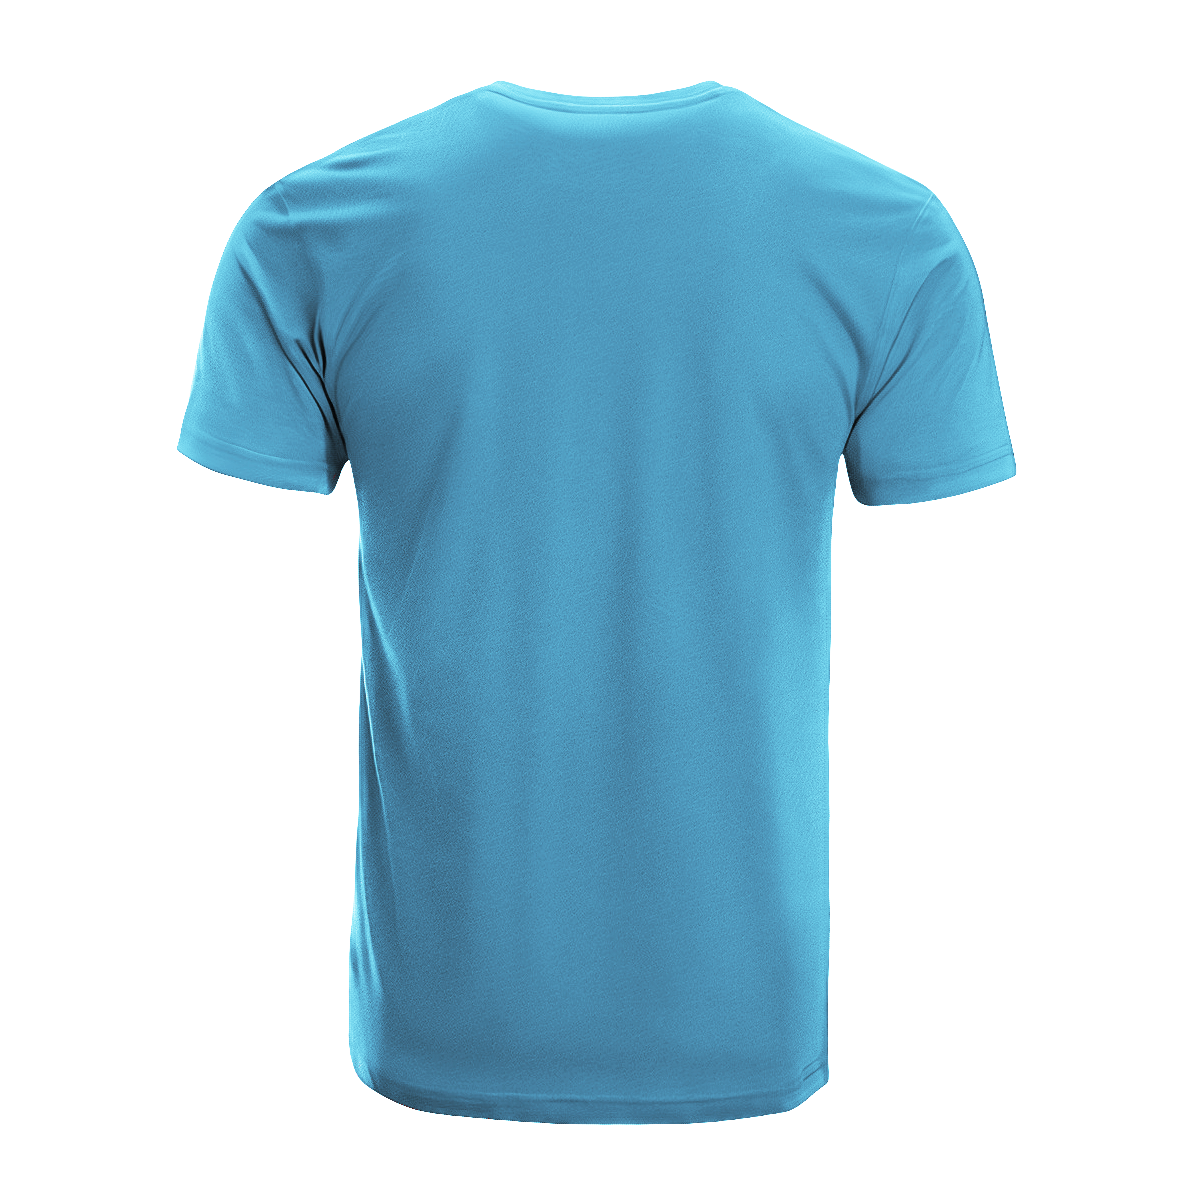 MacThomas Tartan Crest T-shirt - I'm not yelling style